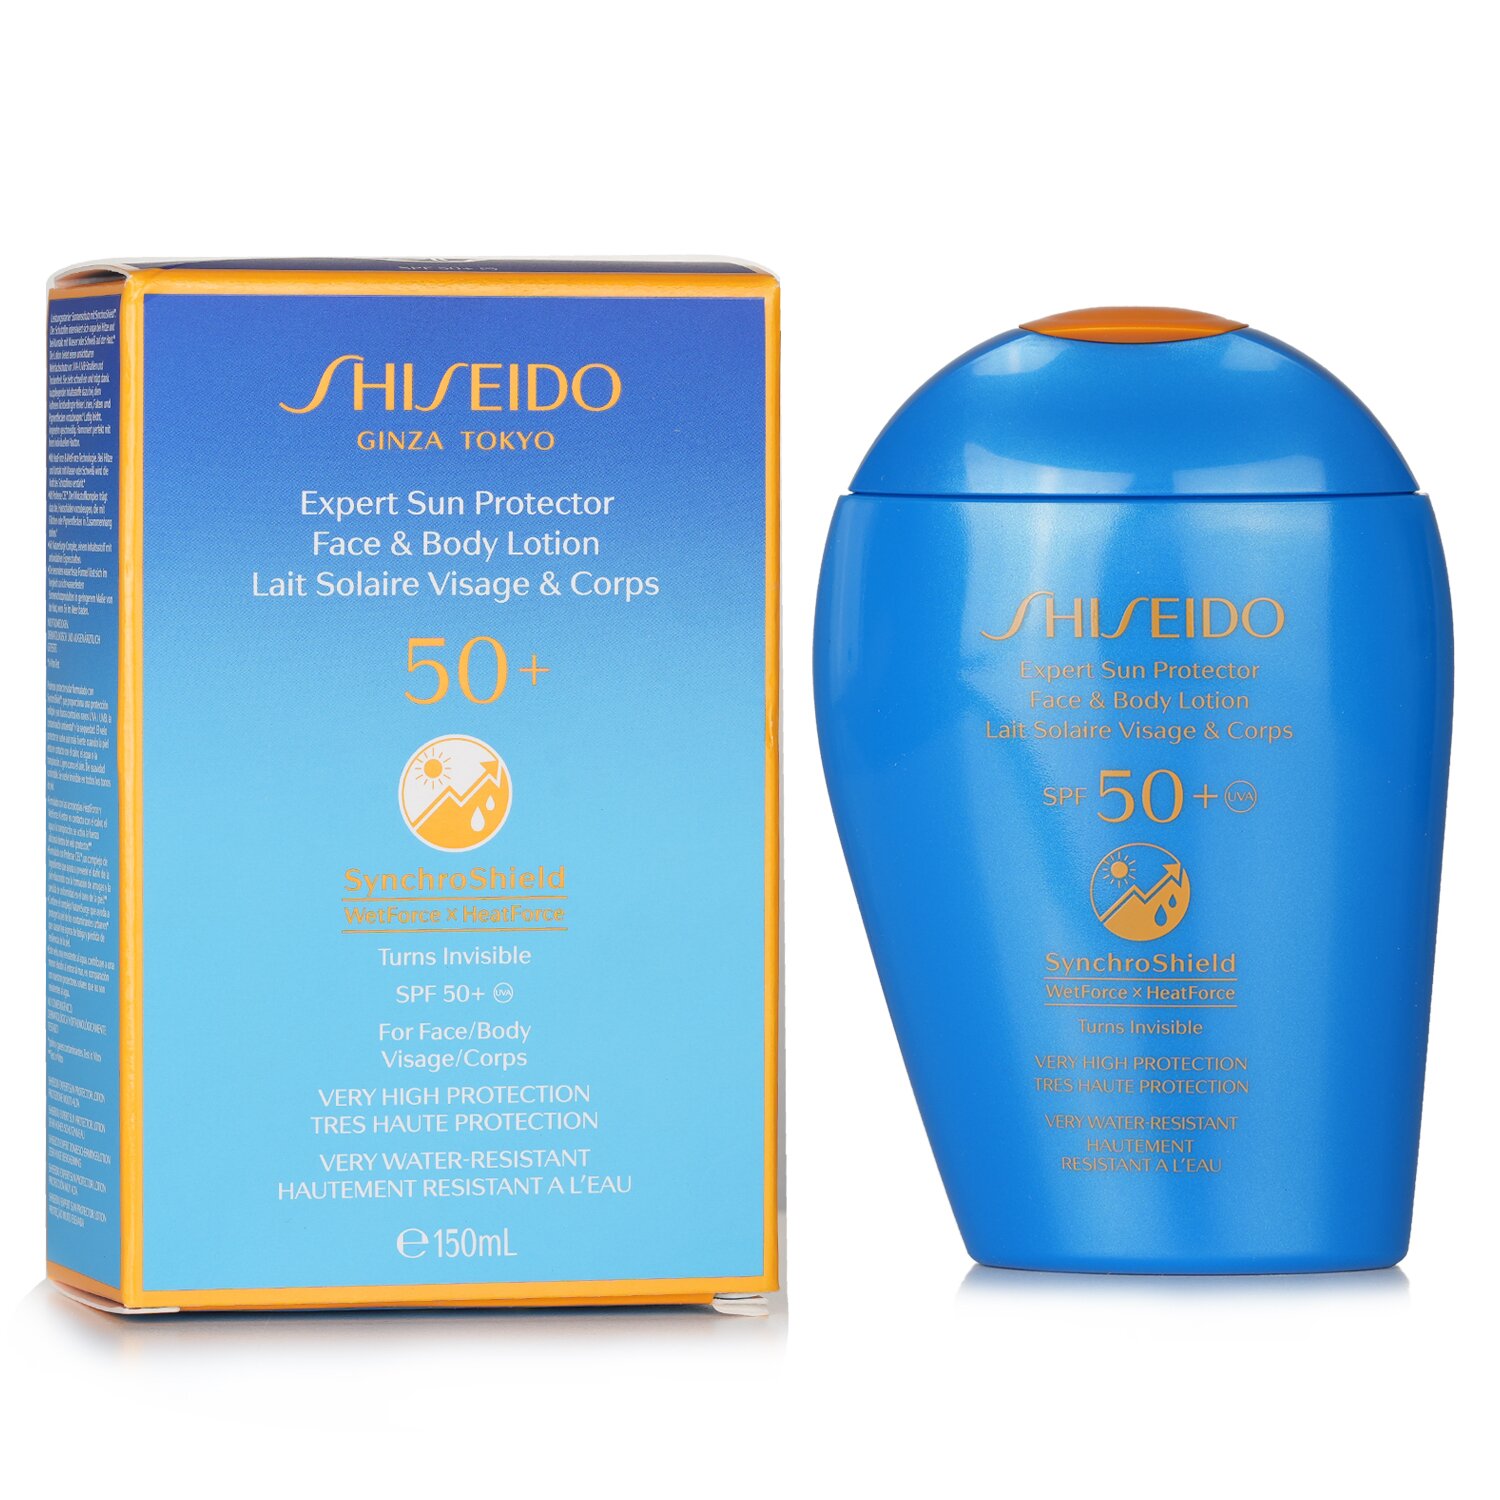 Shiseido Expert Sun Protector SPF 50+UVA лосион за лице и тяло (Прави невидим, много висока защита, много водоустойчив) 150ml/5.07oz